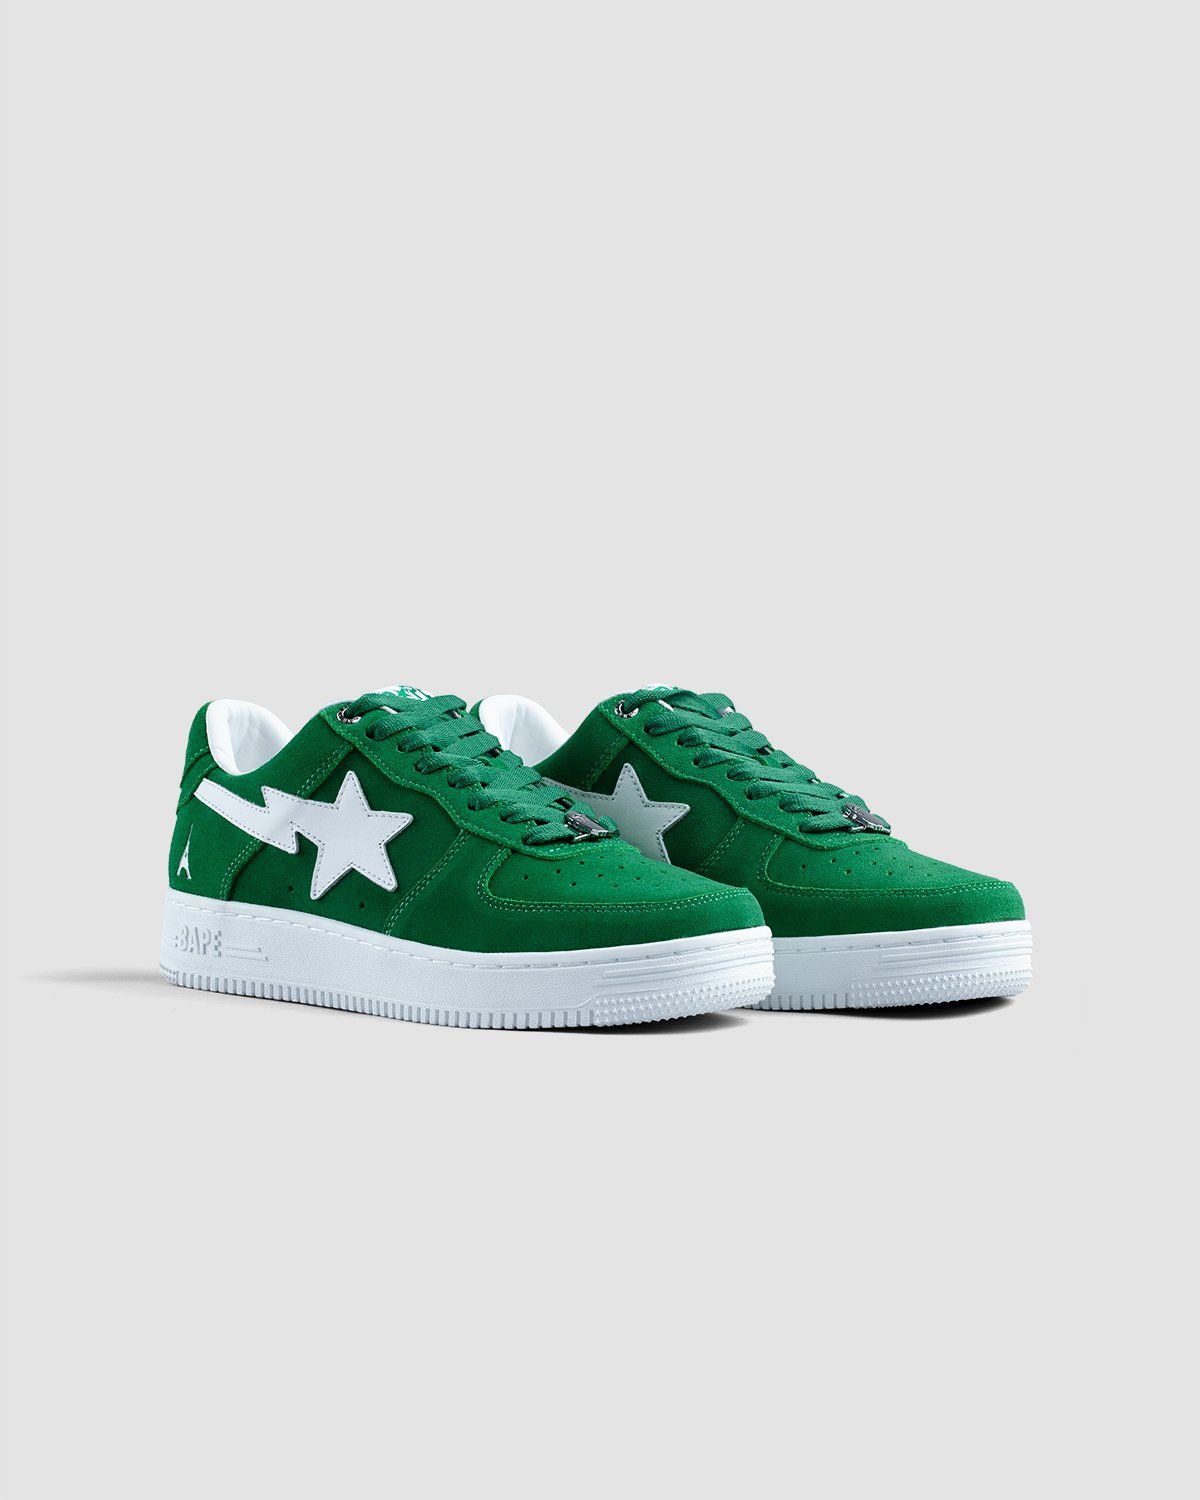 BAPE x Highsnobiety – BAPE STA Green - Low Top Sneakers - Green - Image 2